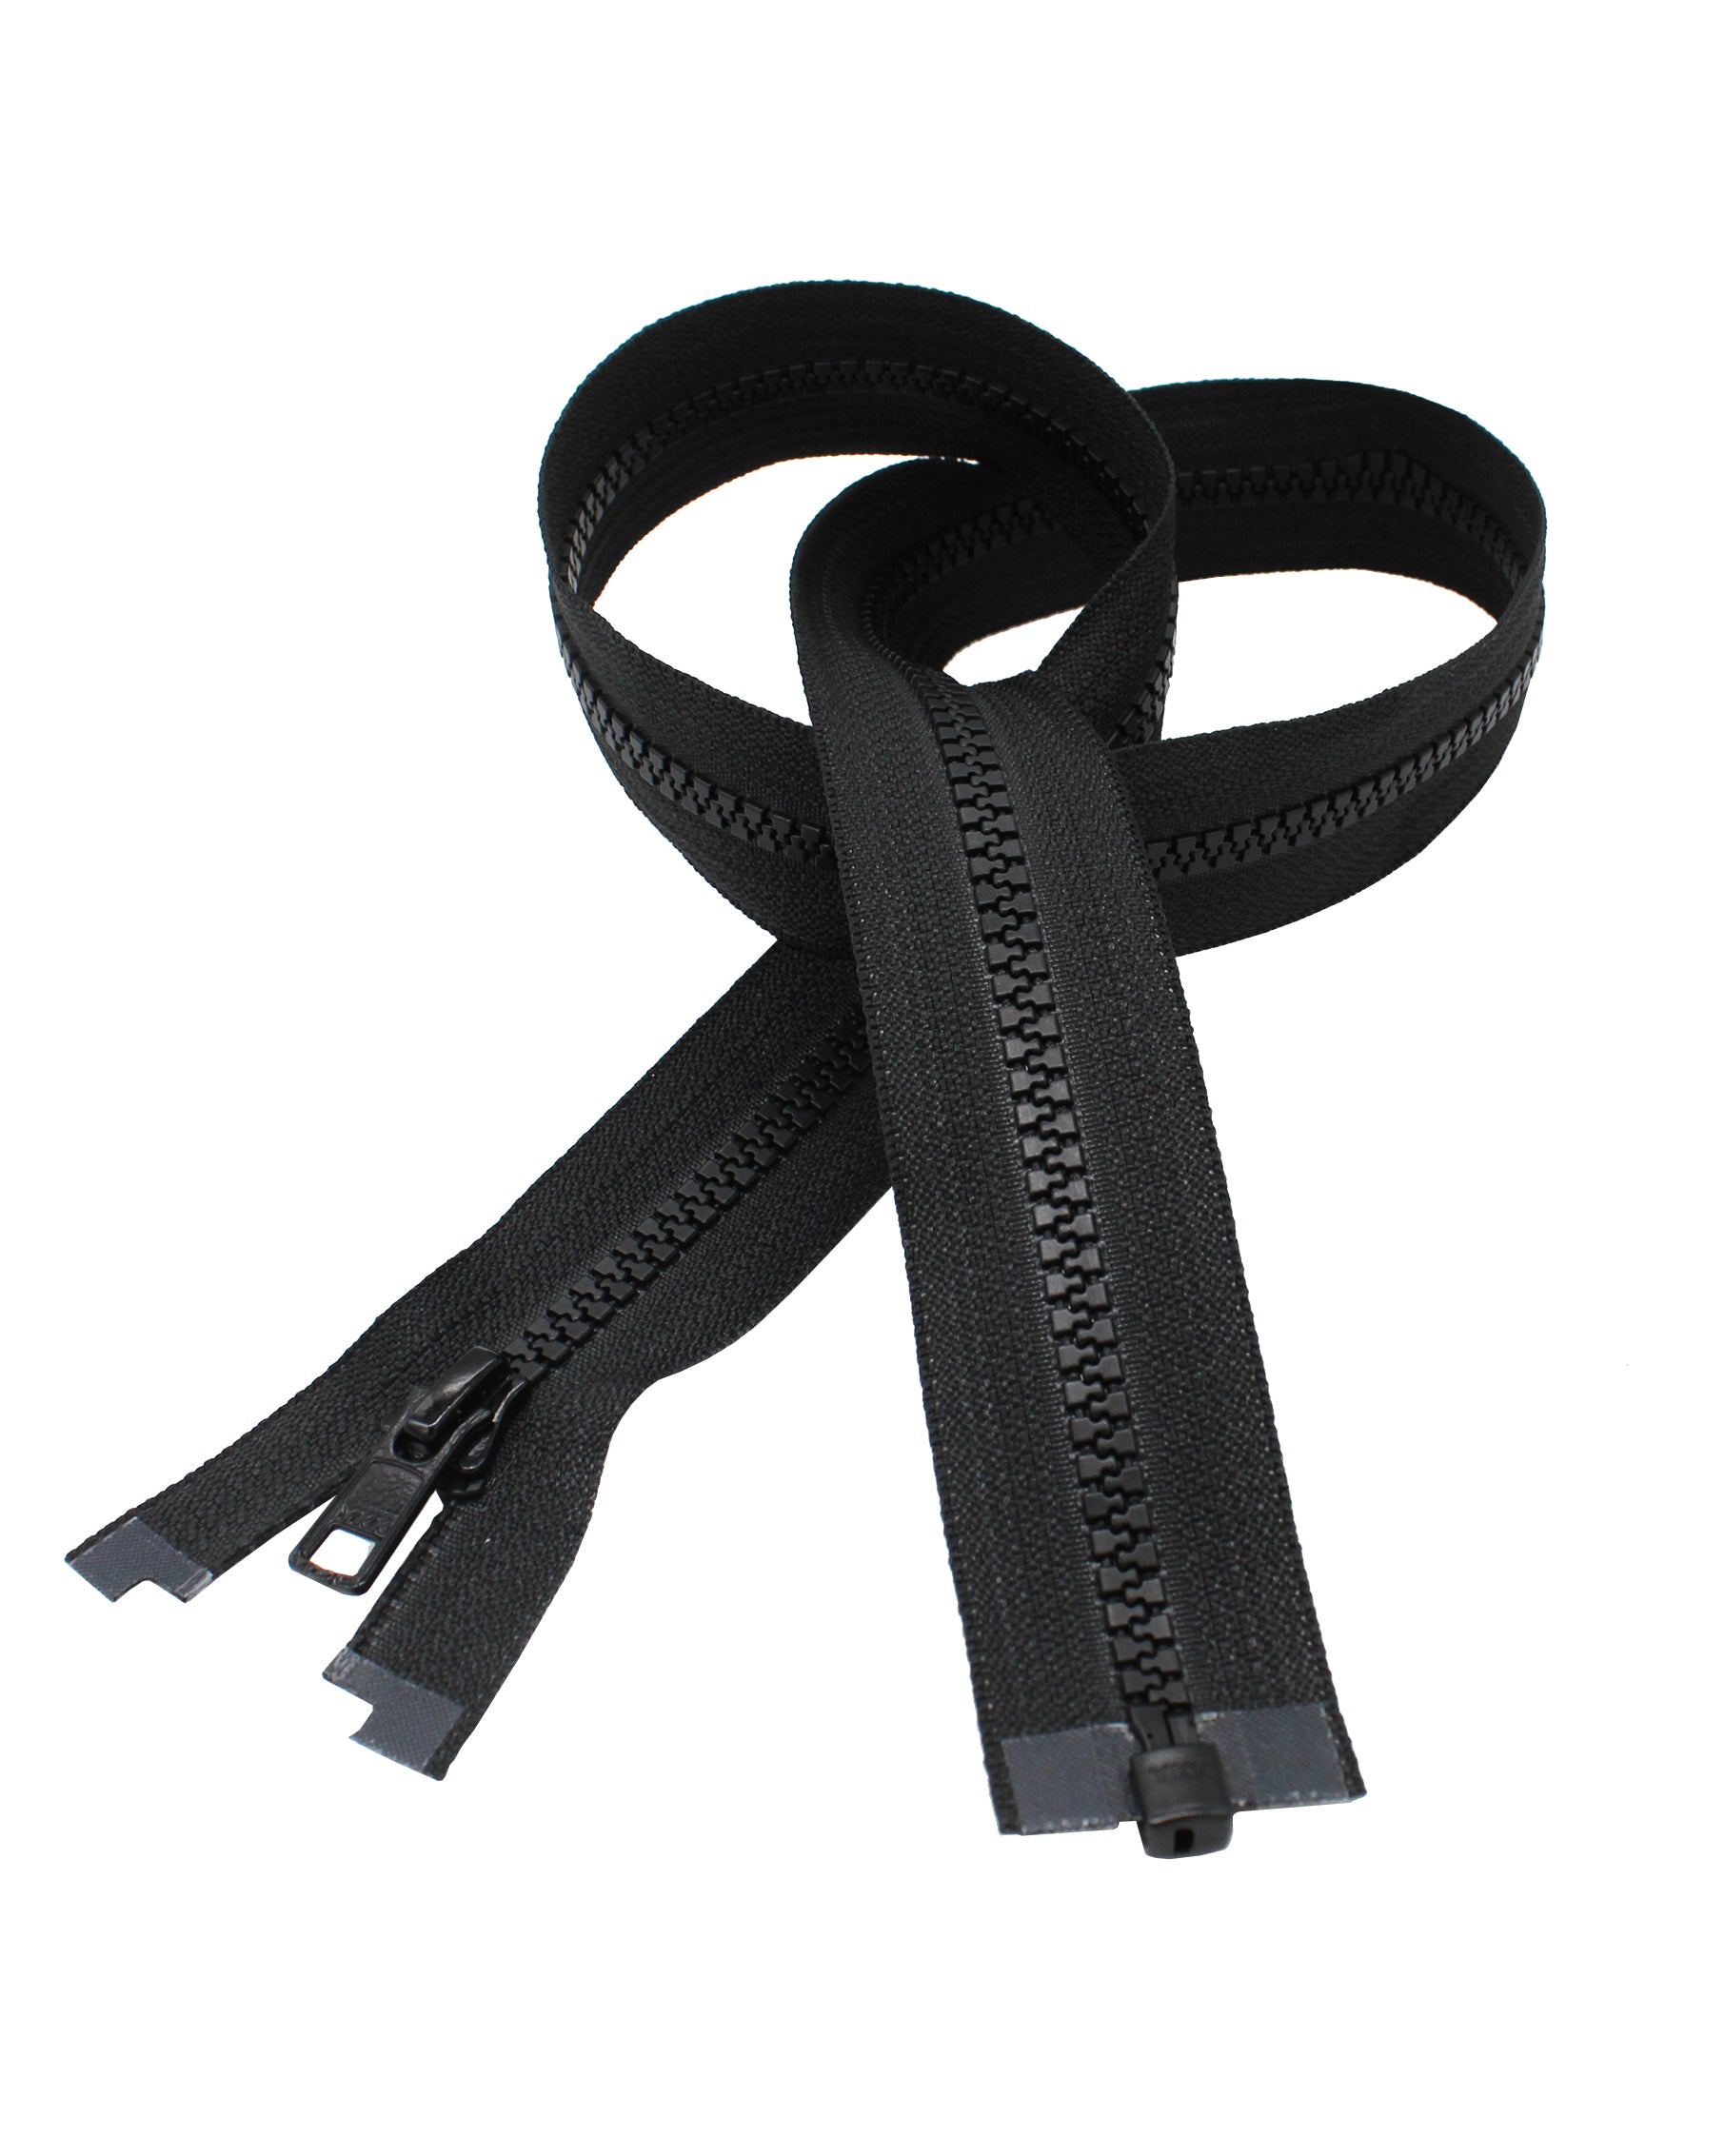 YKK Zipper Pull Extension Ring, Large